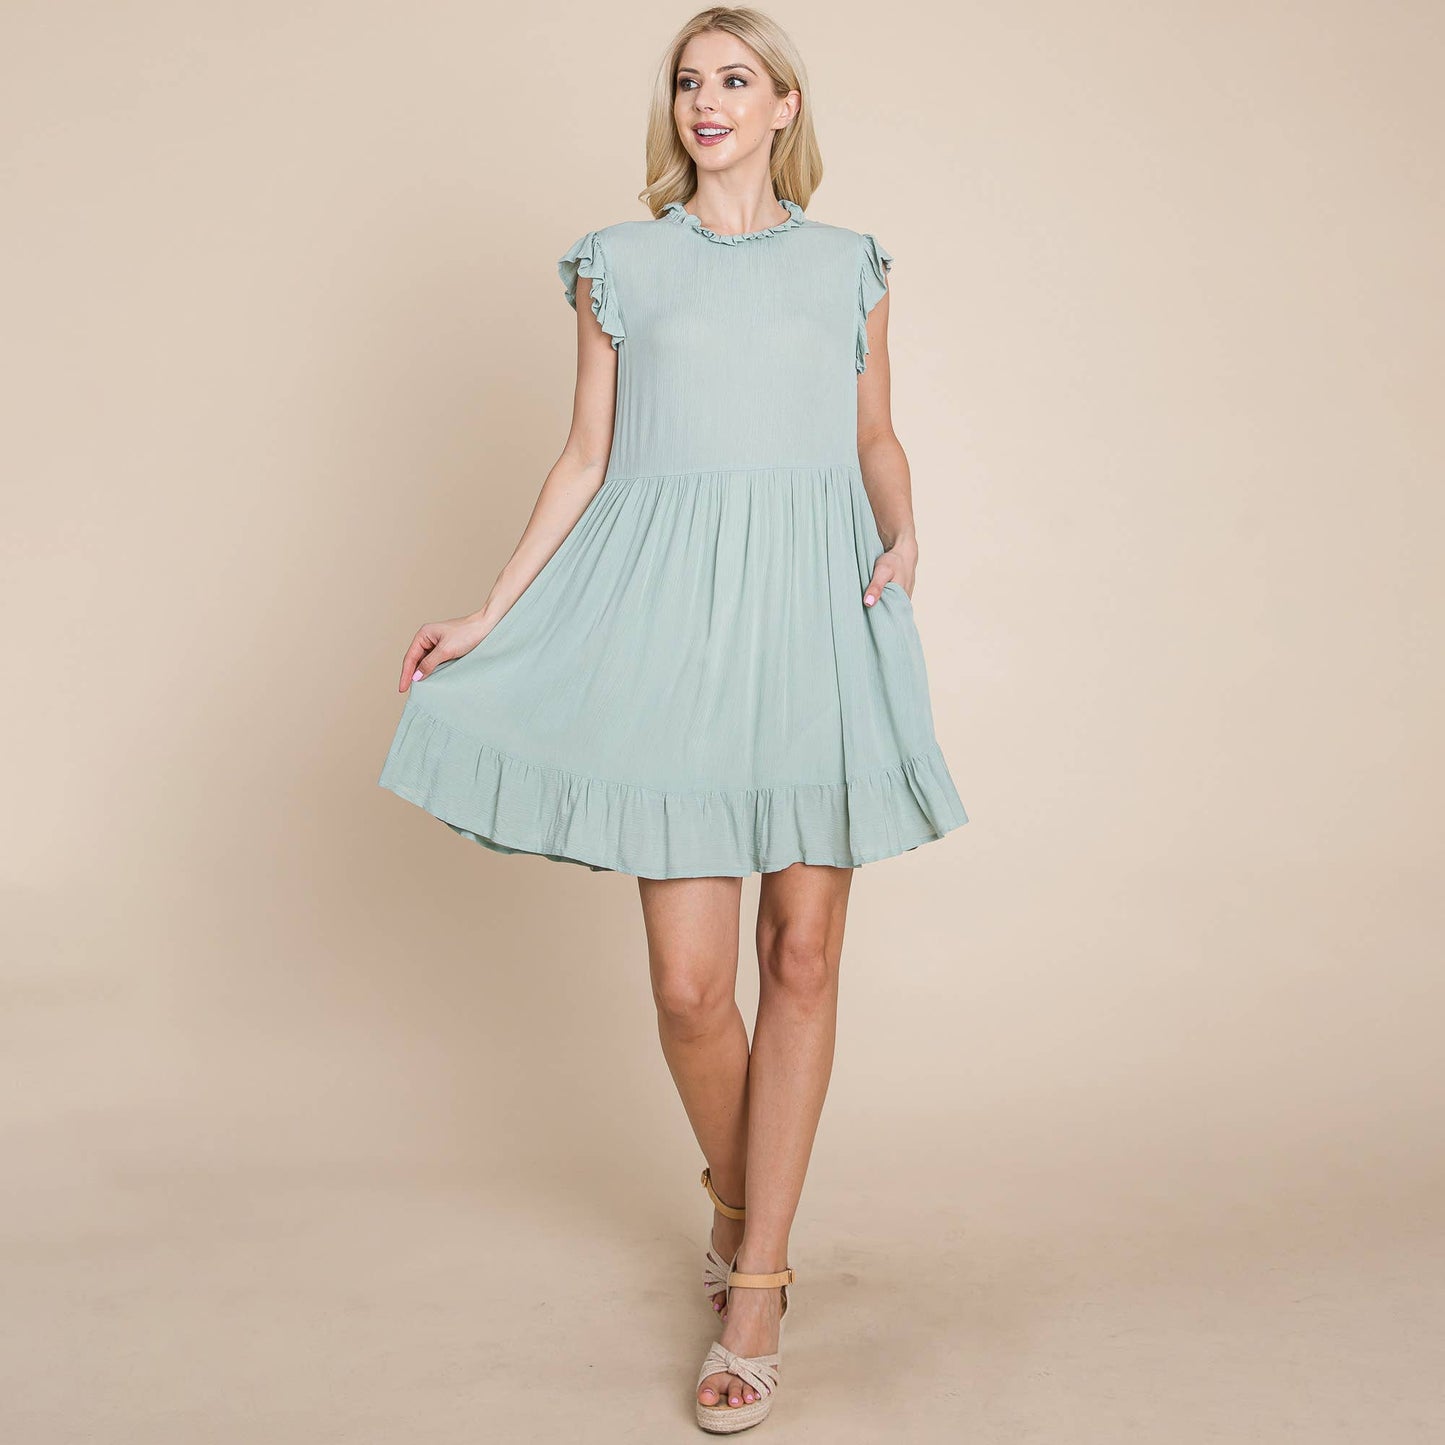 Sleeveless Babydoll Ruffled dress with pockets: Sage / Small 4-6